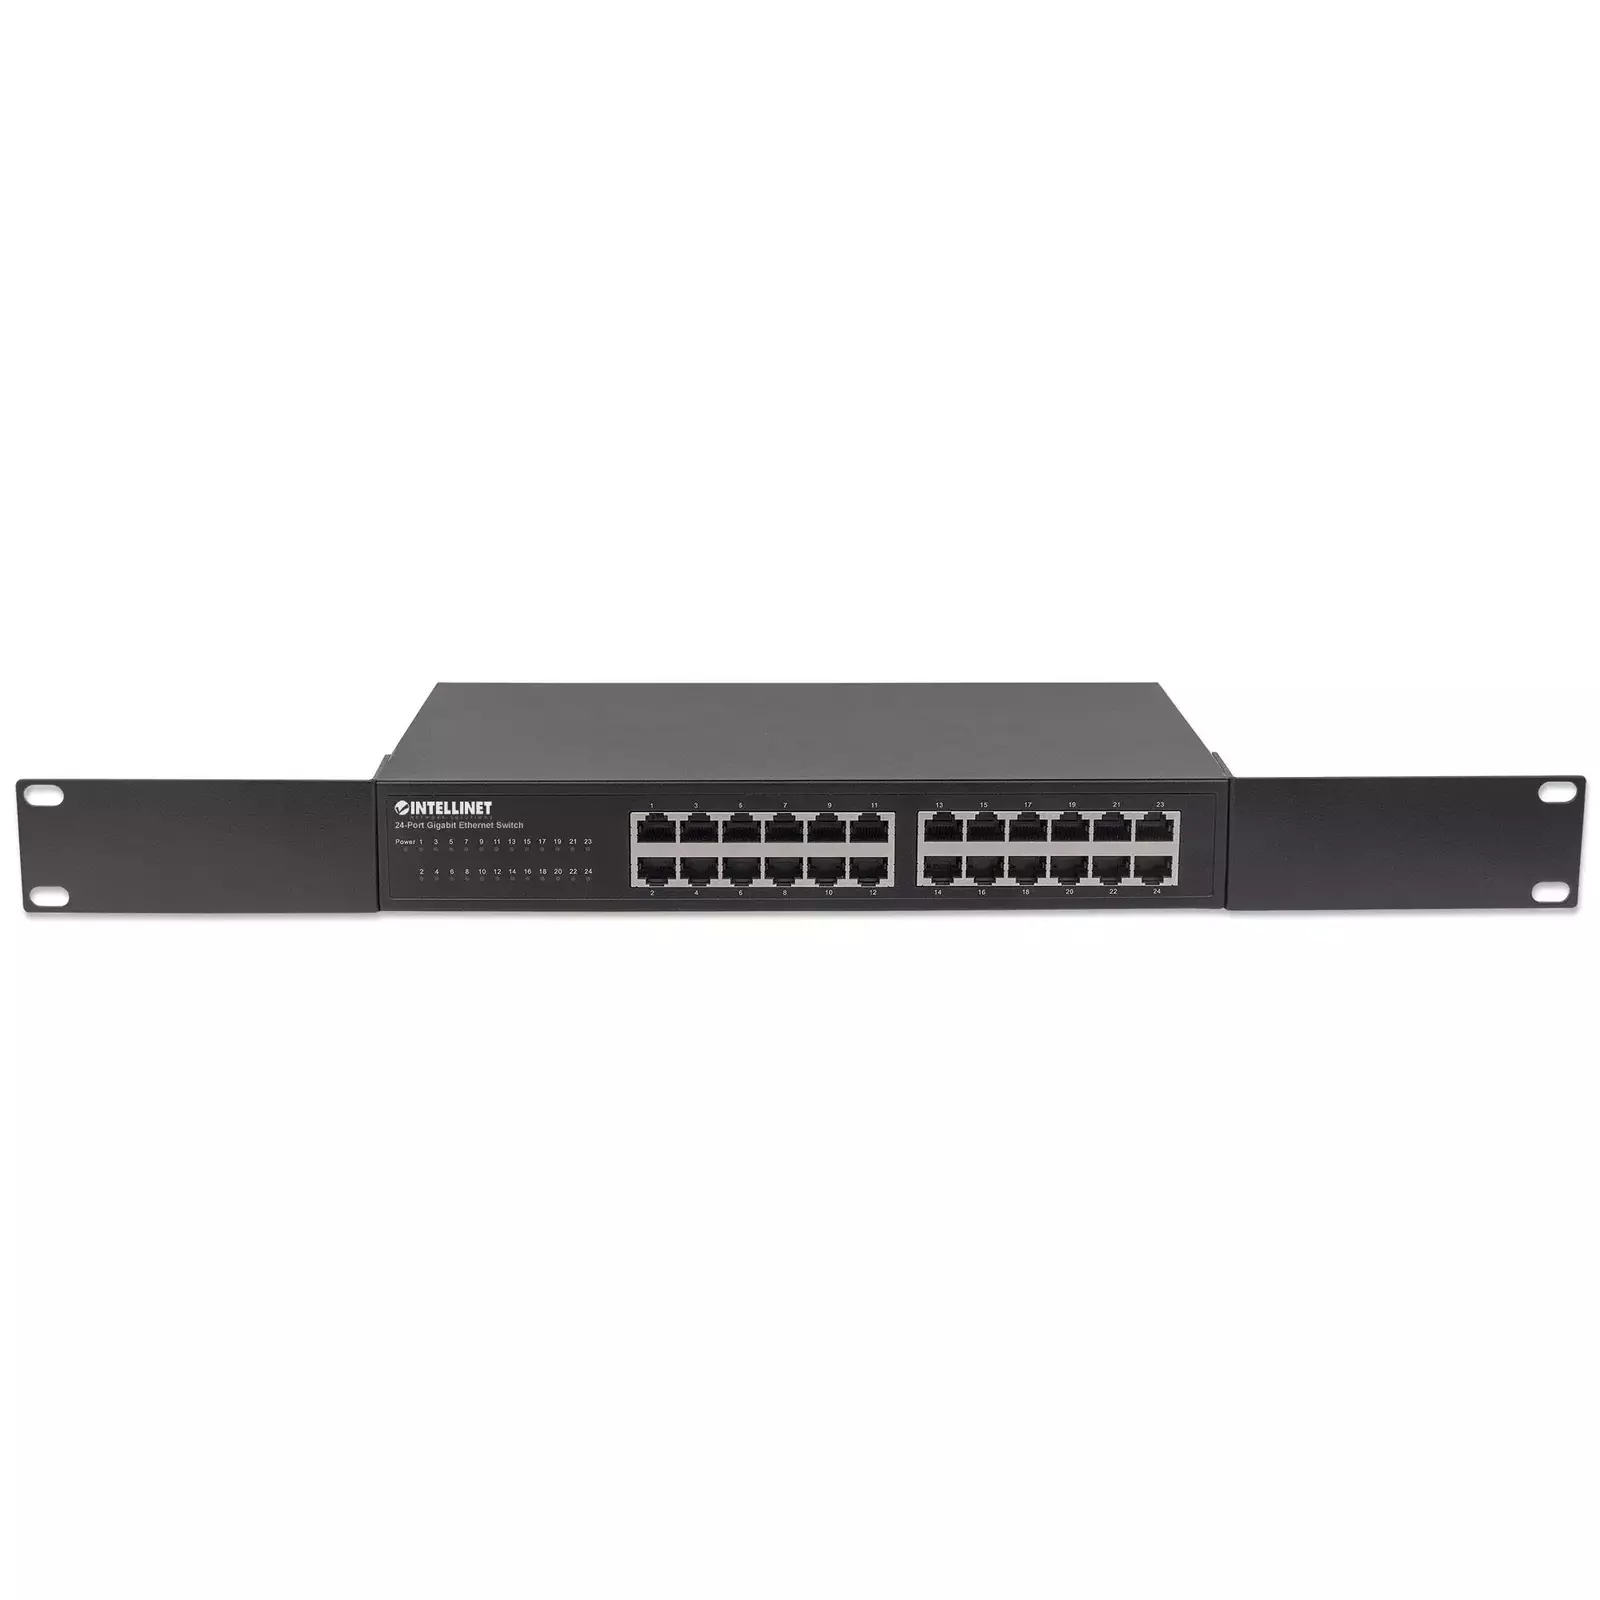 Intellinet 24-Port Gigabit Ethernet Switch (561273)